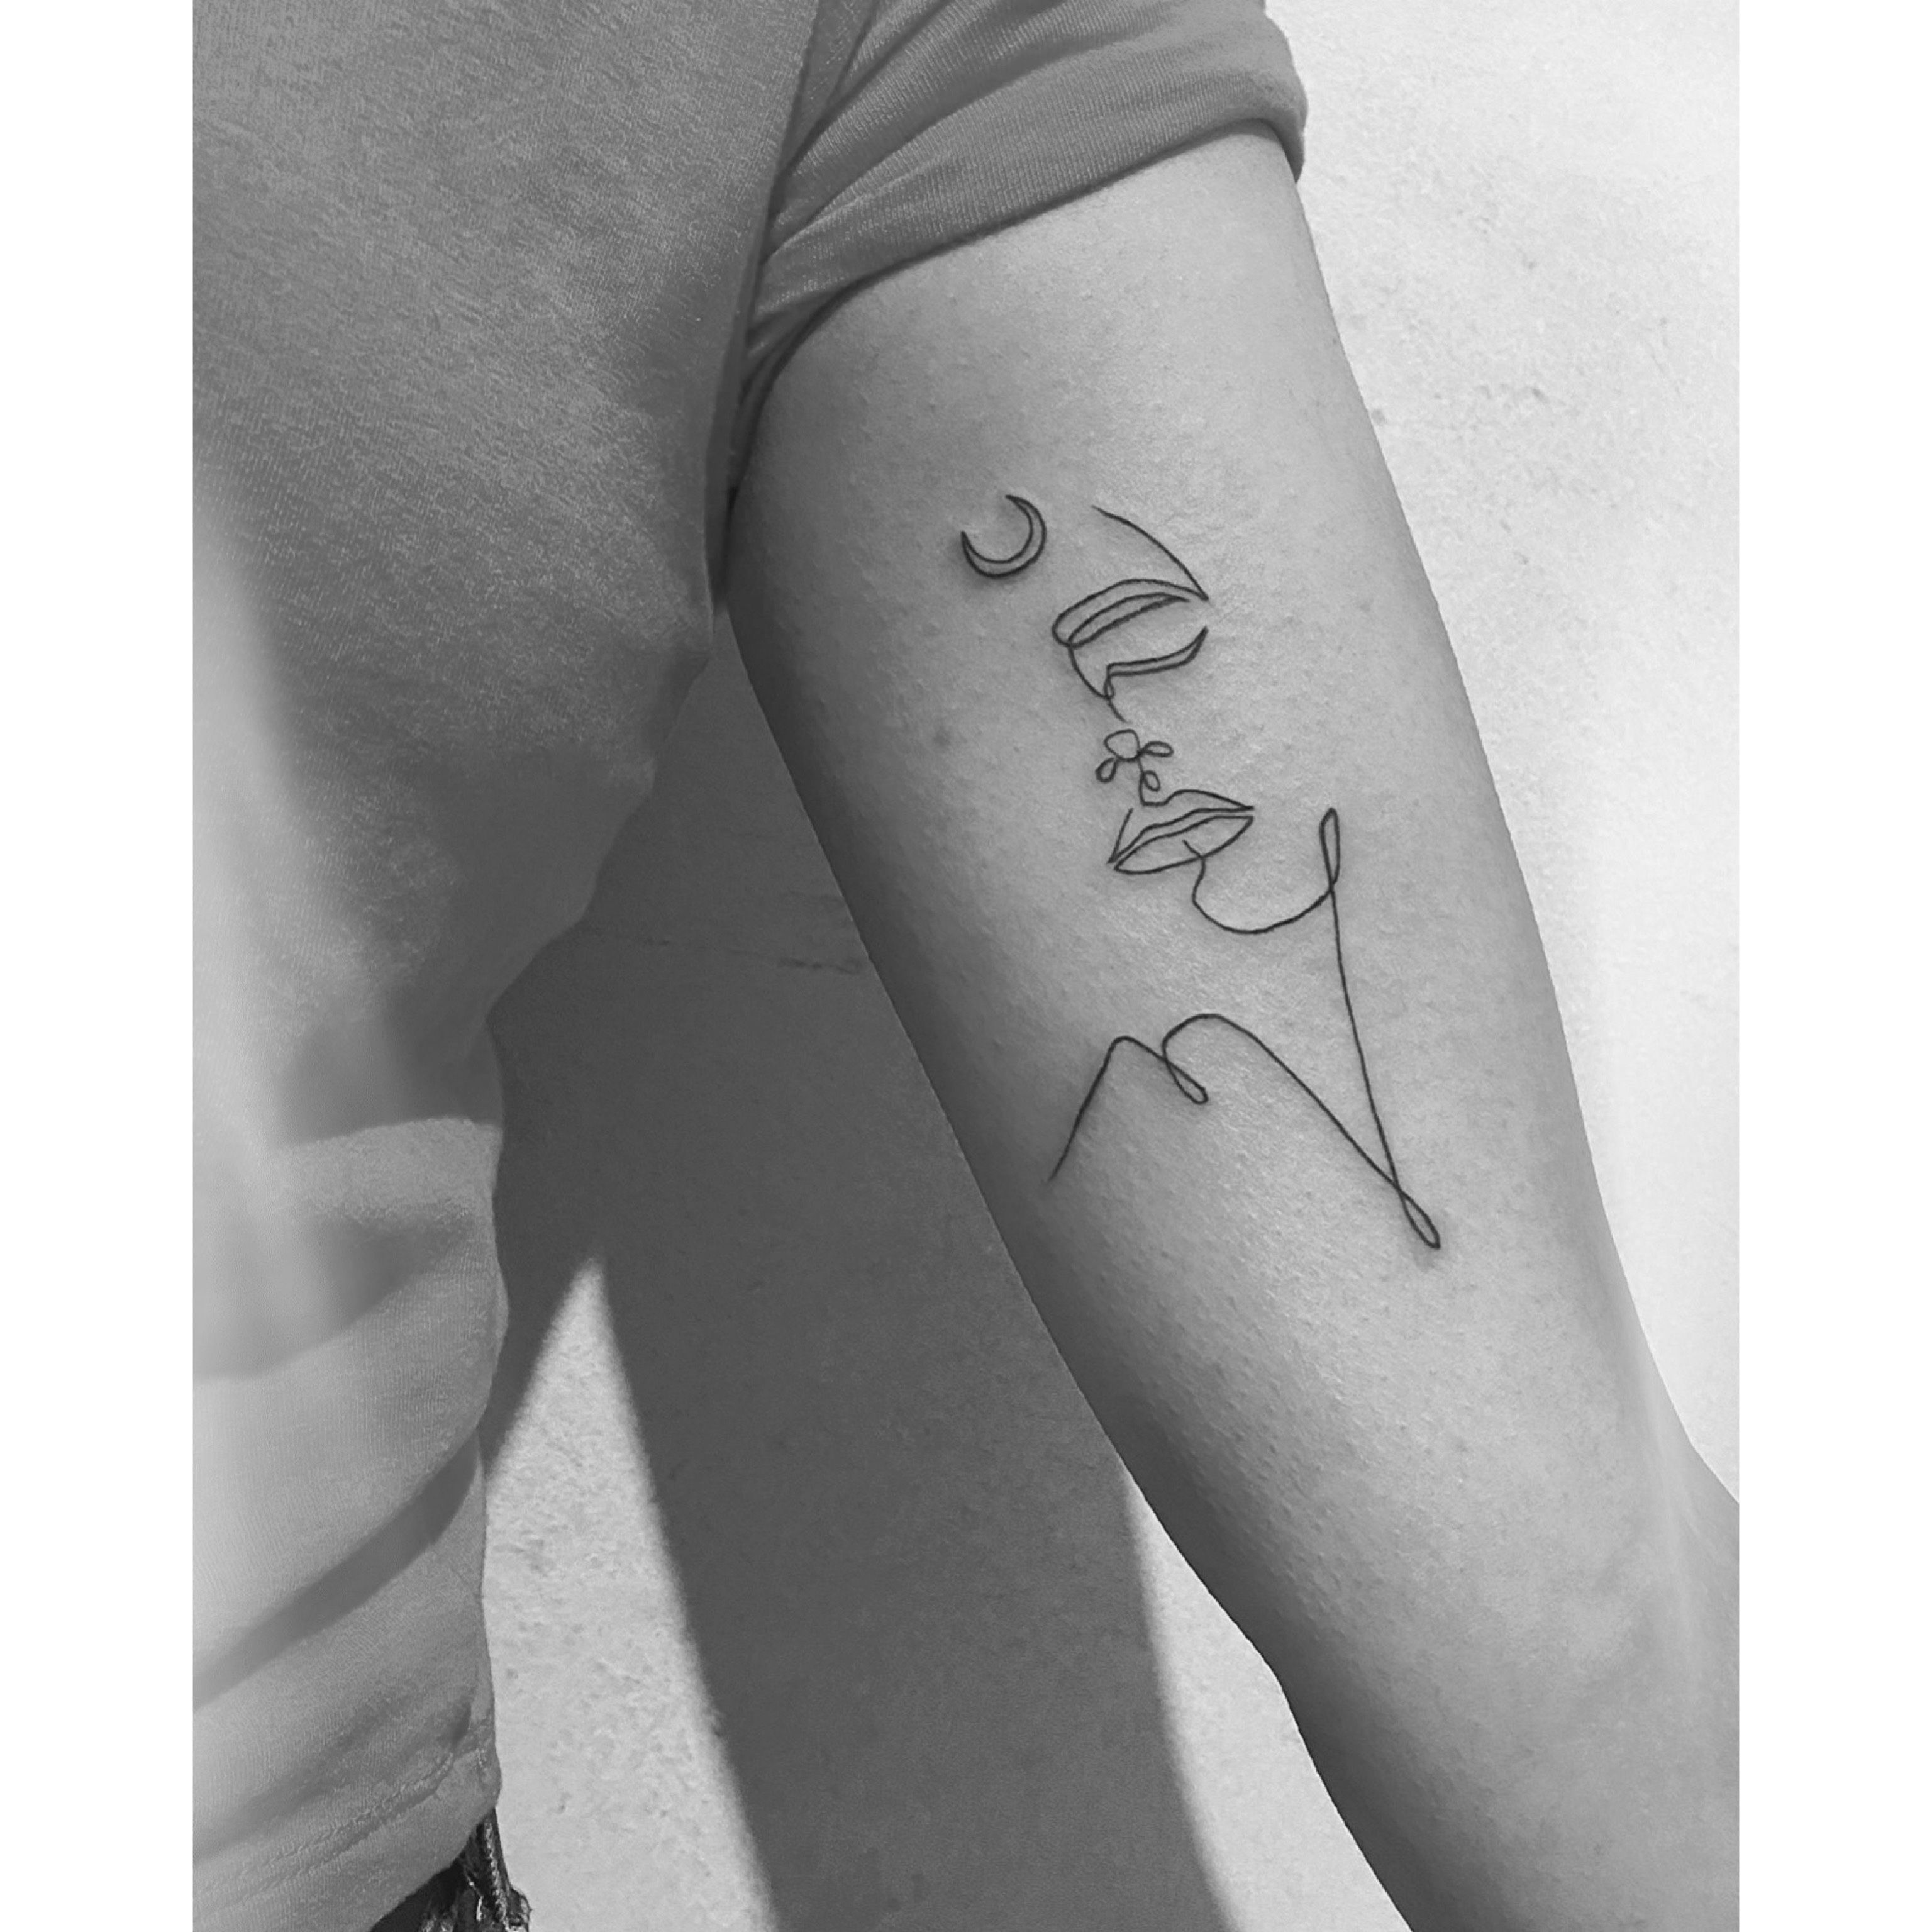 Artistry King Tattoo  Wild Child script back thigh tattoo Artist  Jt   Facebook